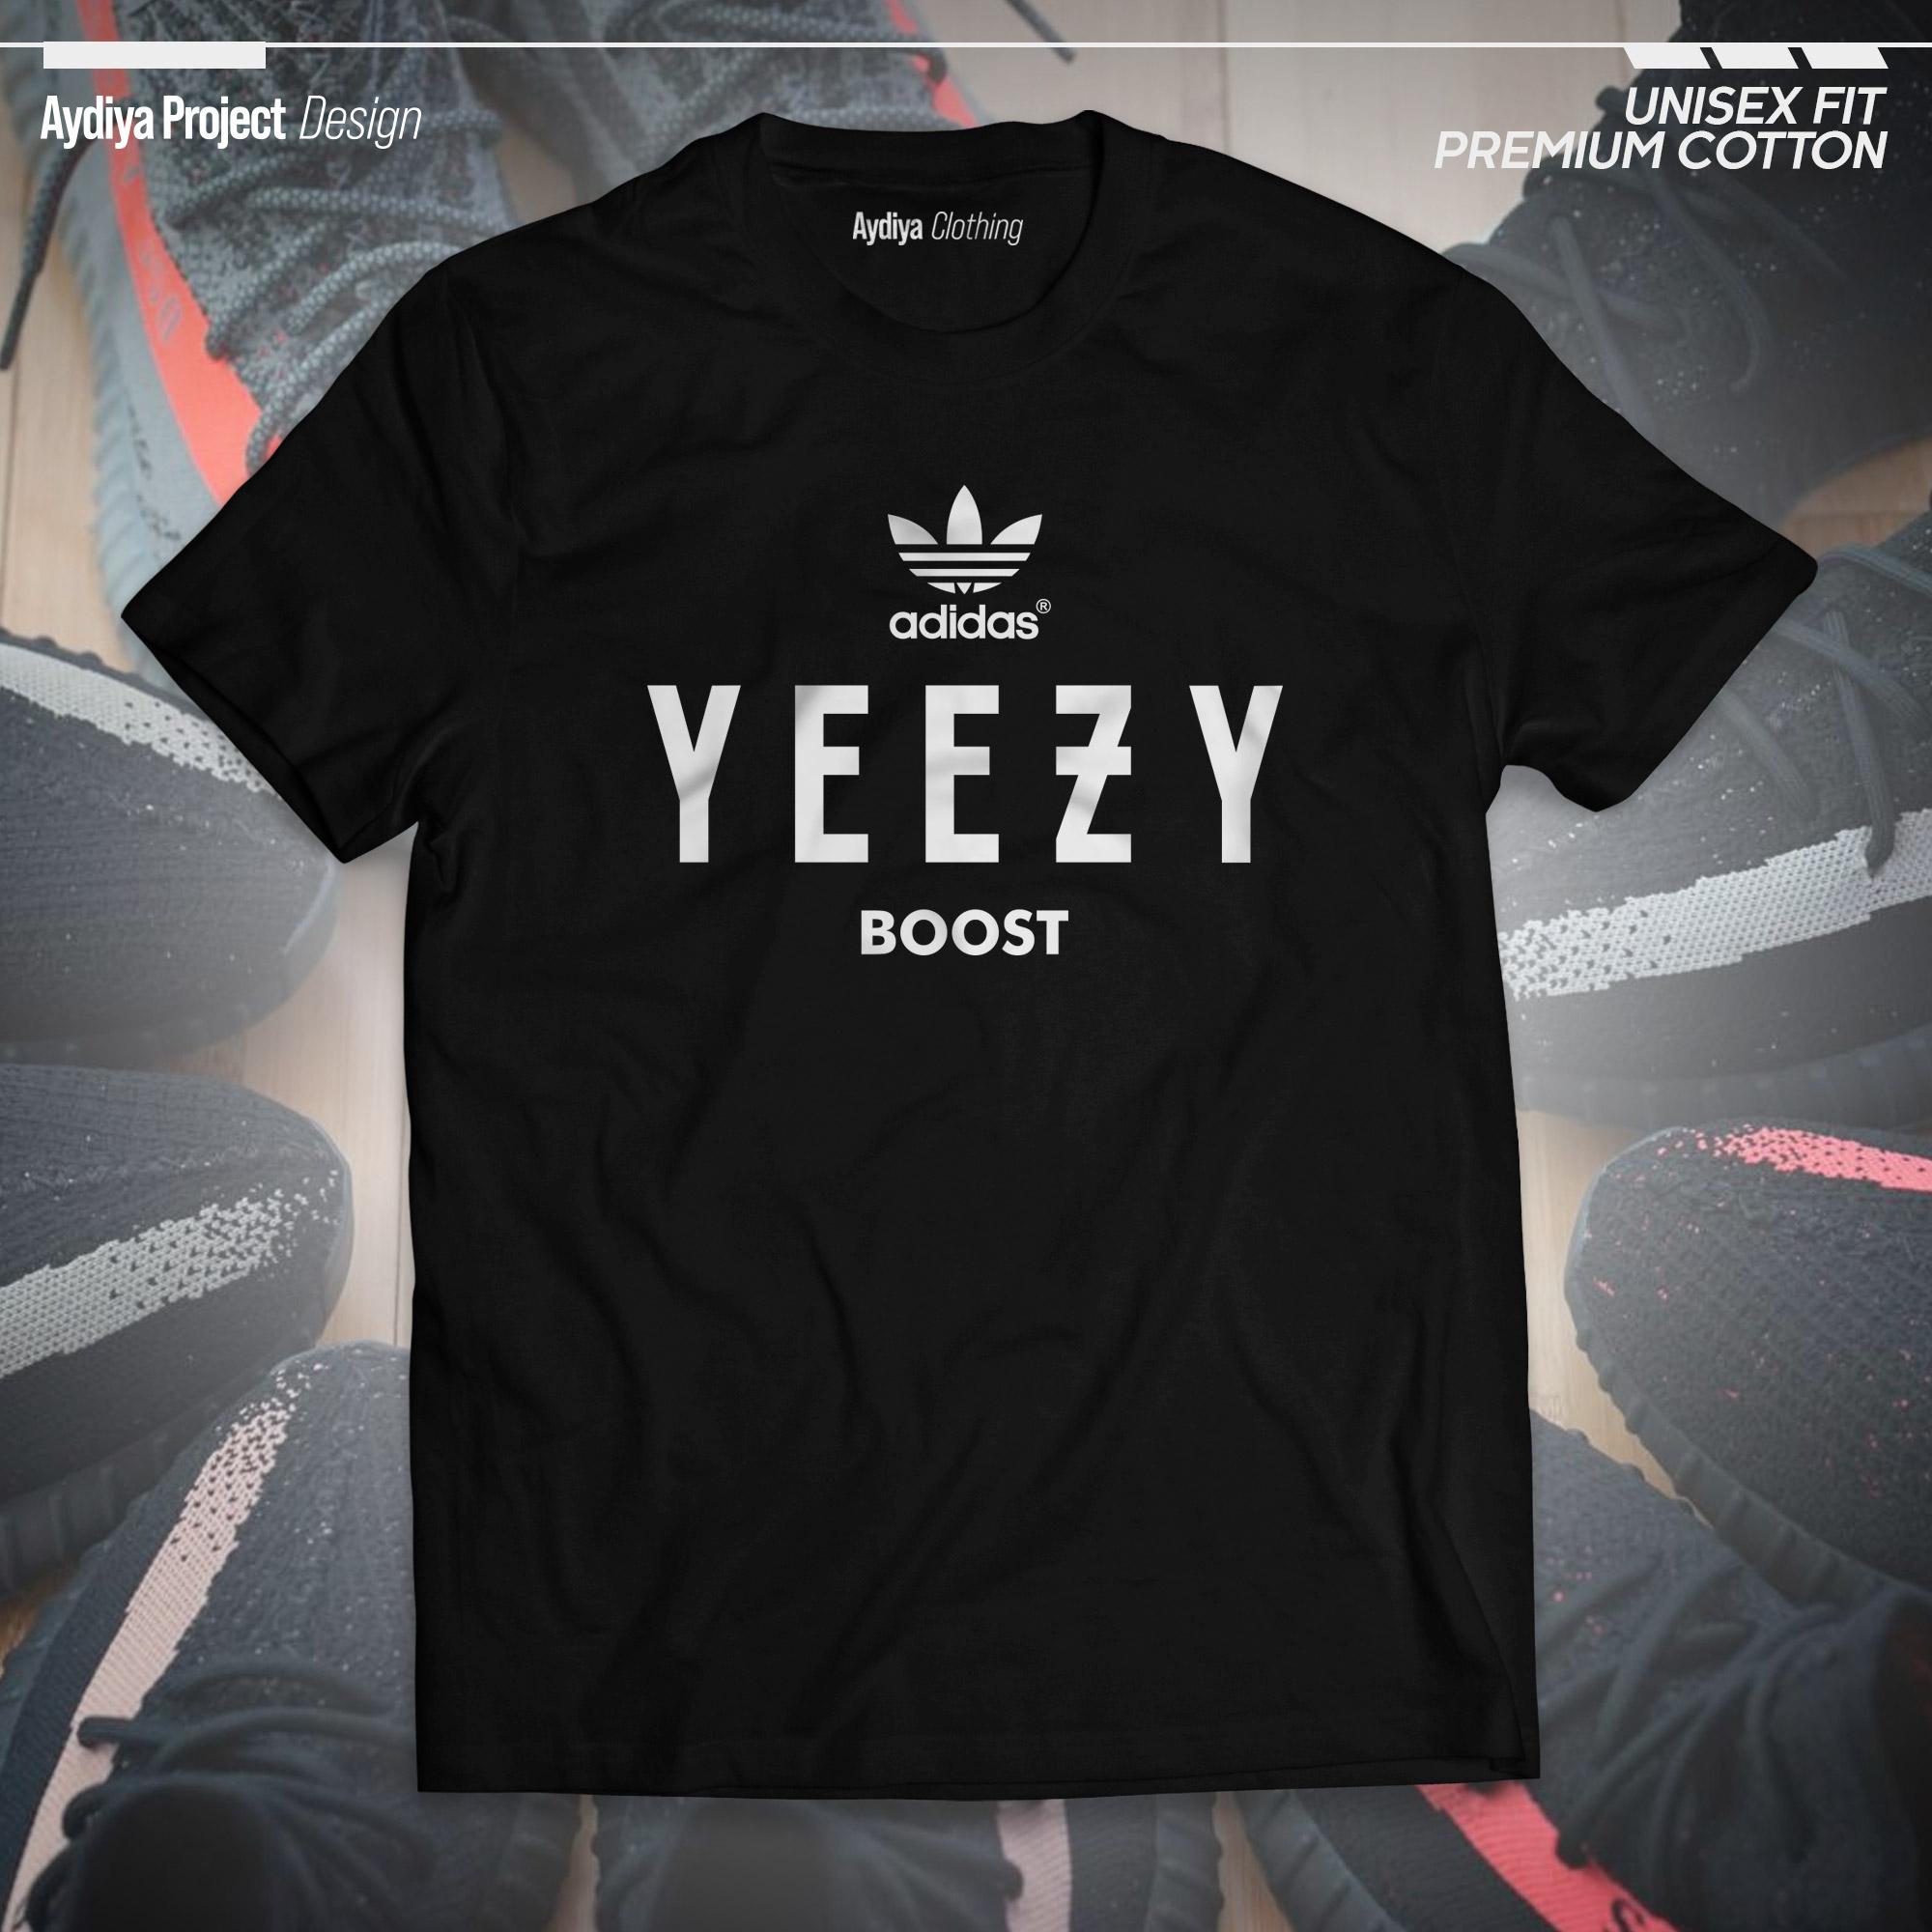 Adidas Yeezy Boost Shirt - HY Aydiya Clothing | PH